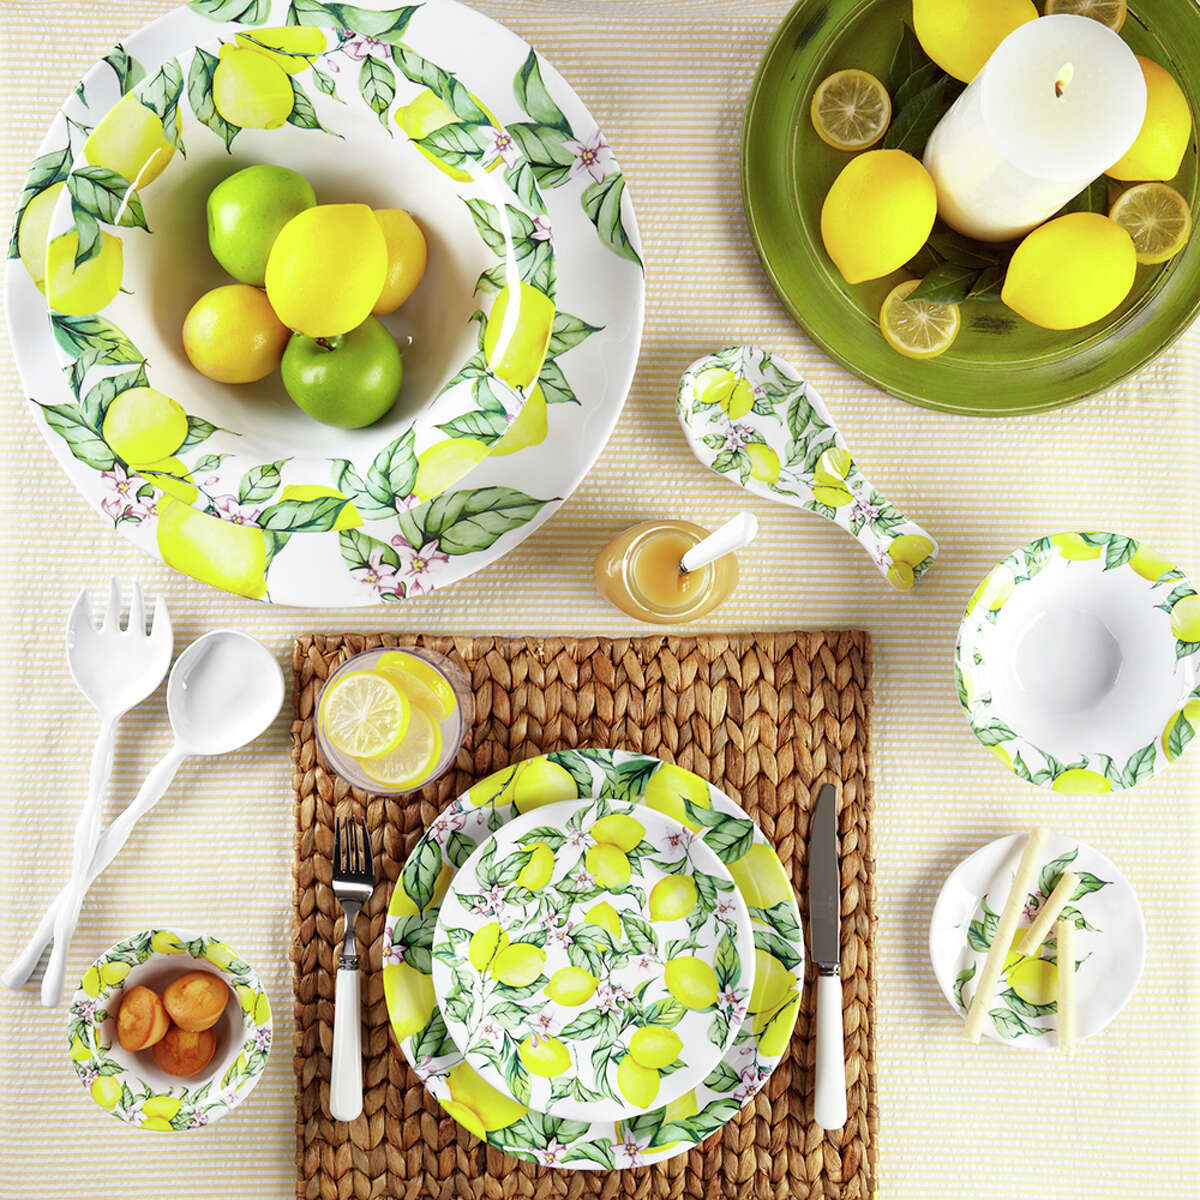 Тарелки с лимонами. Лимон на тарелке. Посуда с лимонами. Сервировка стола с лимонами. Сервировка с посудой с лимонами.